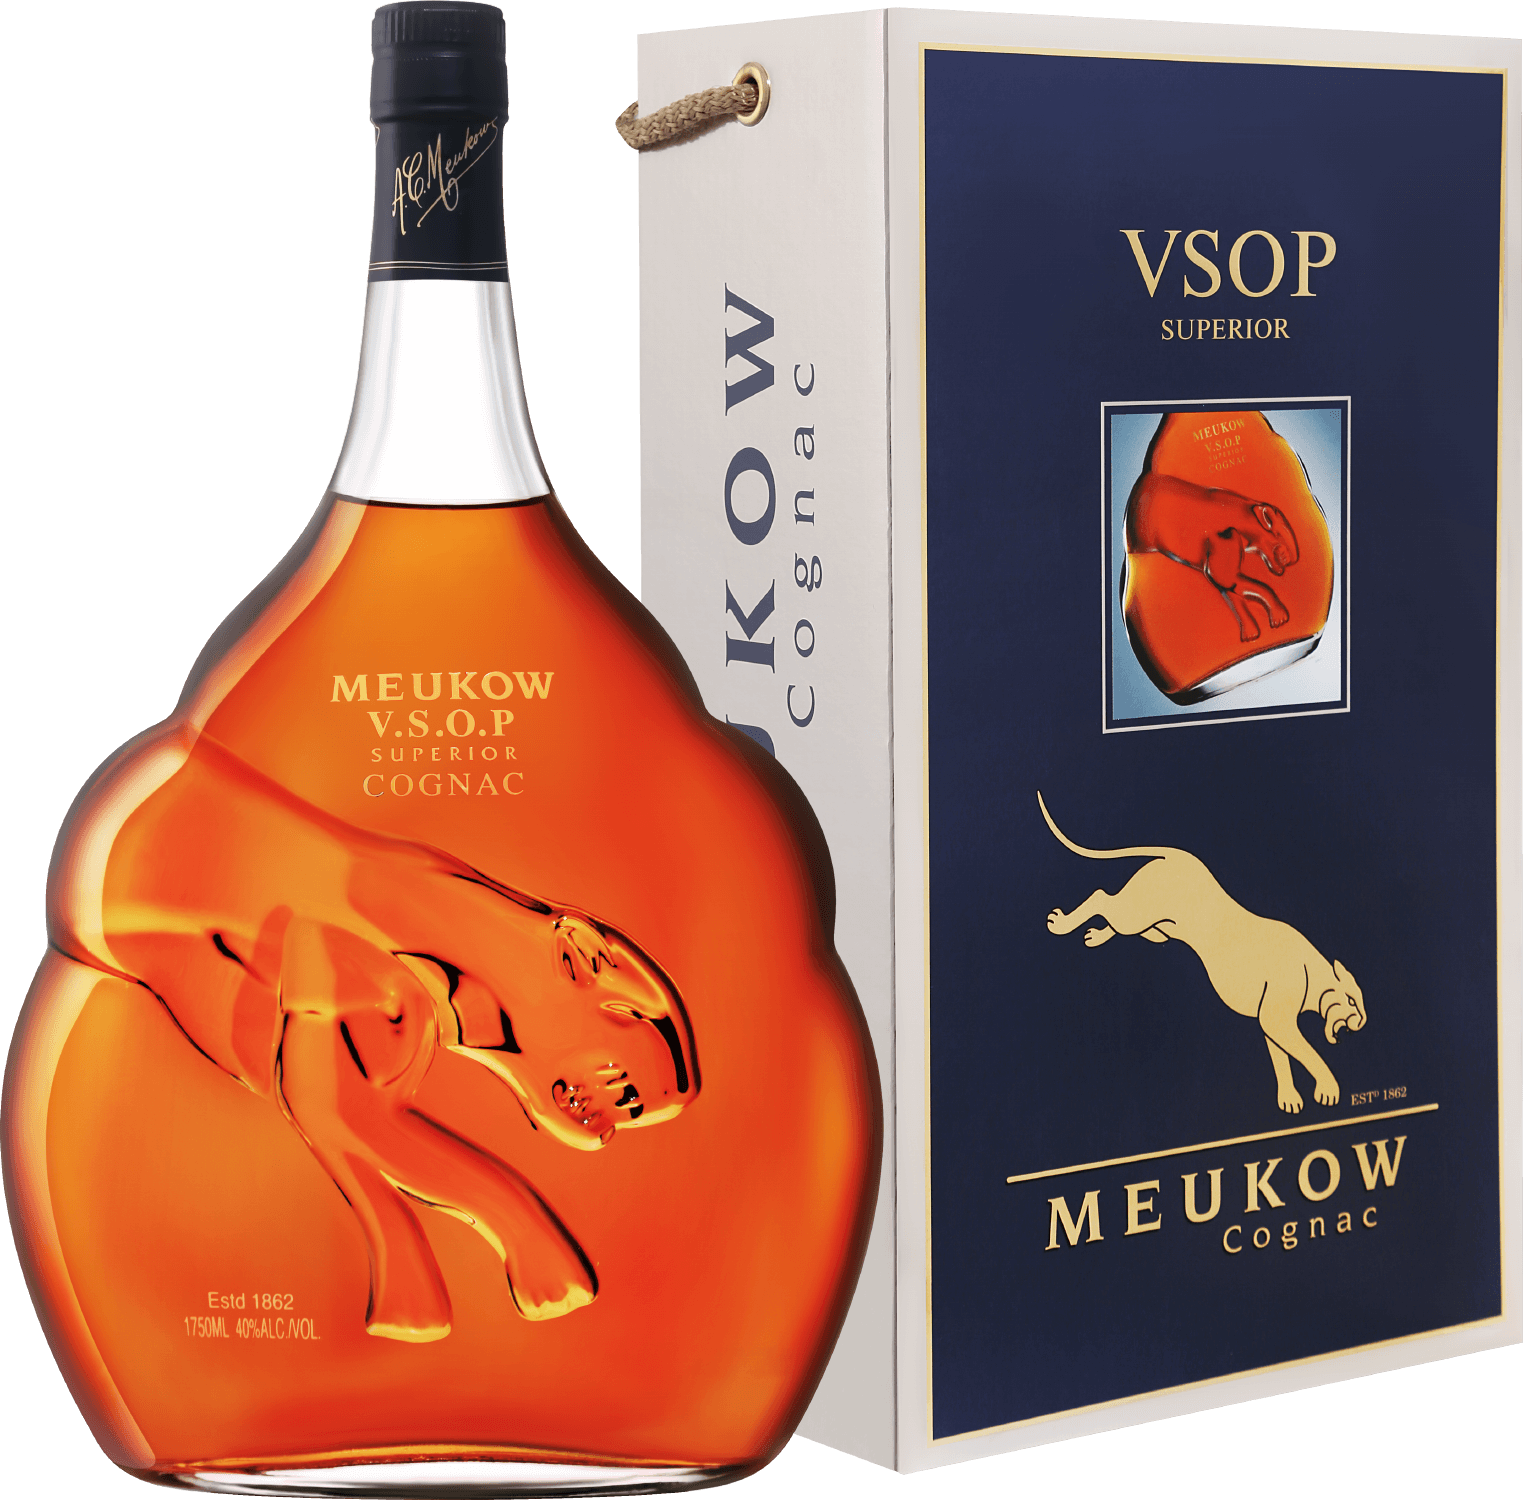 roullet cognac vsop gift box Meukow Cognac VSOP Superior (gift box)